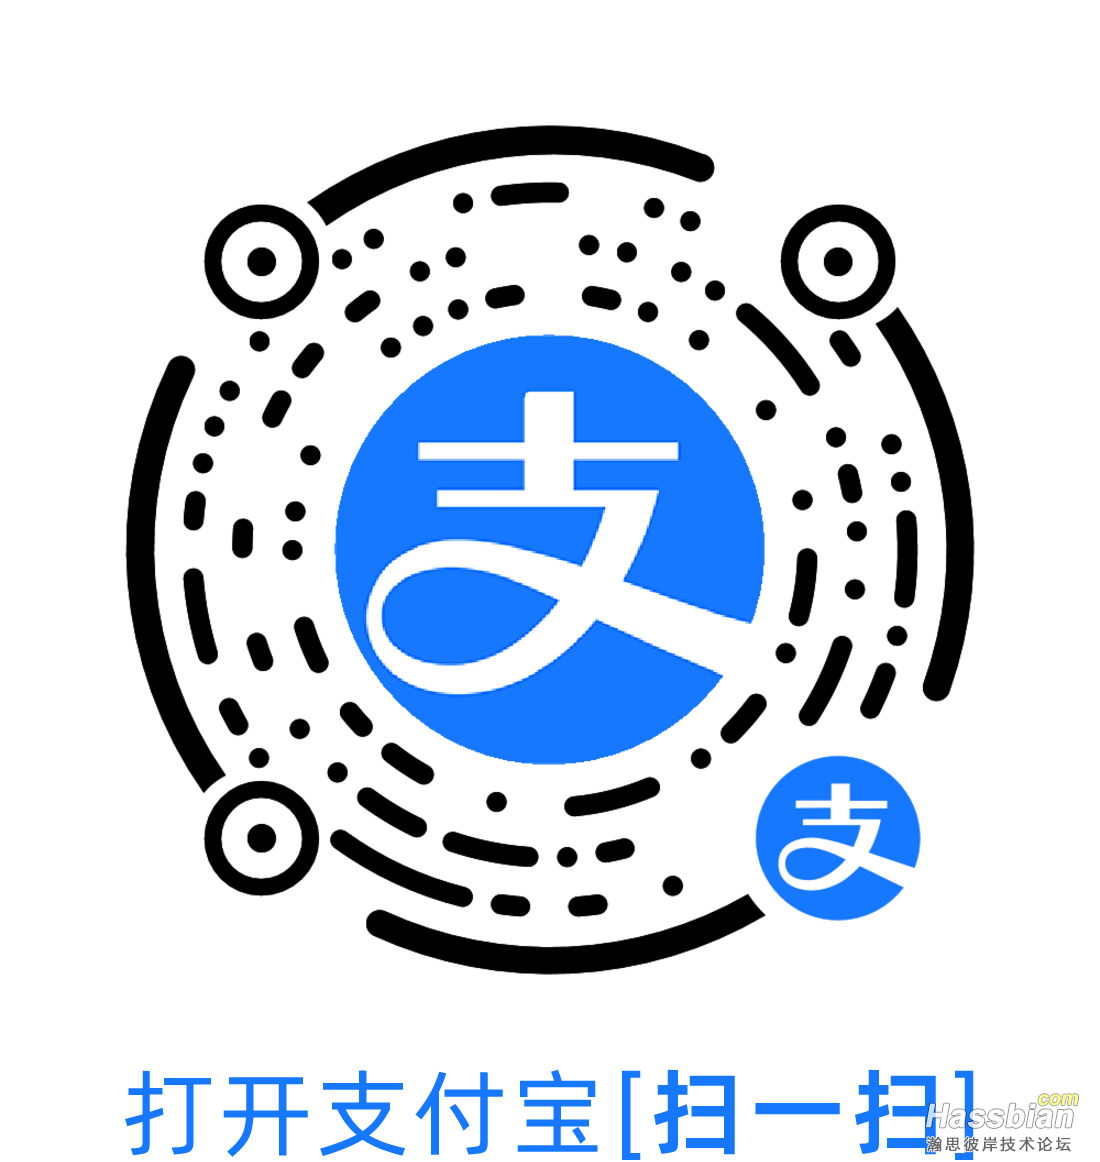 2021003175677413_circle_blue_slogan_50cm.jpg